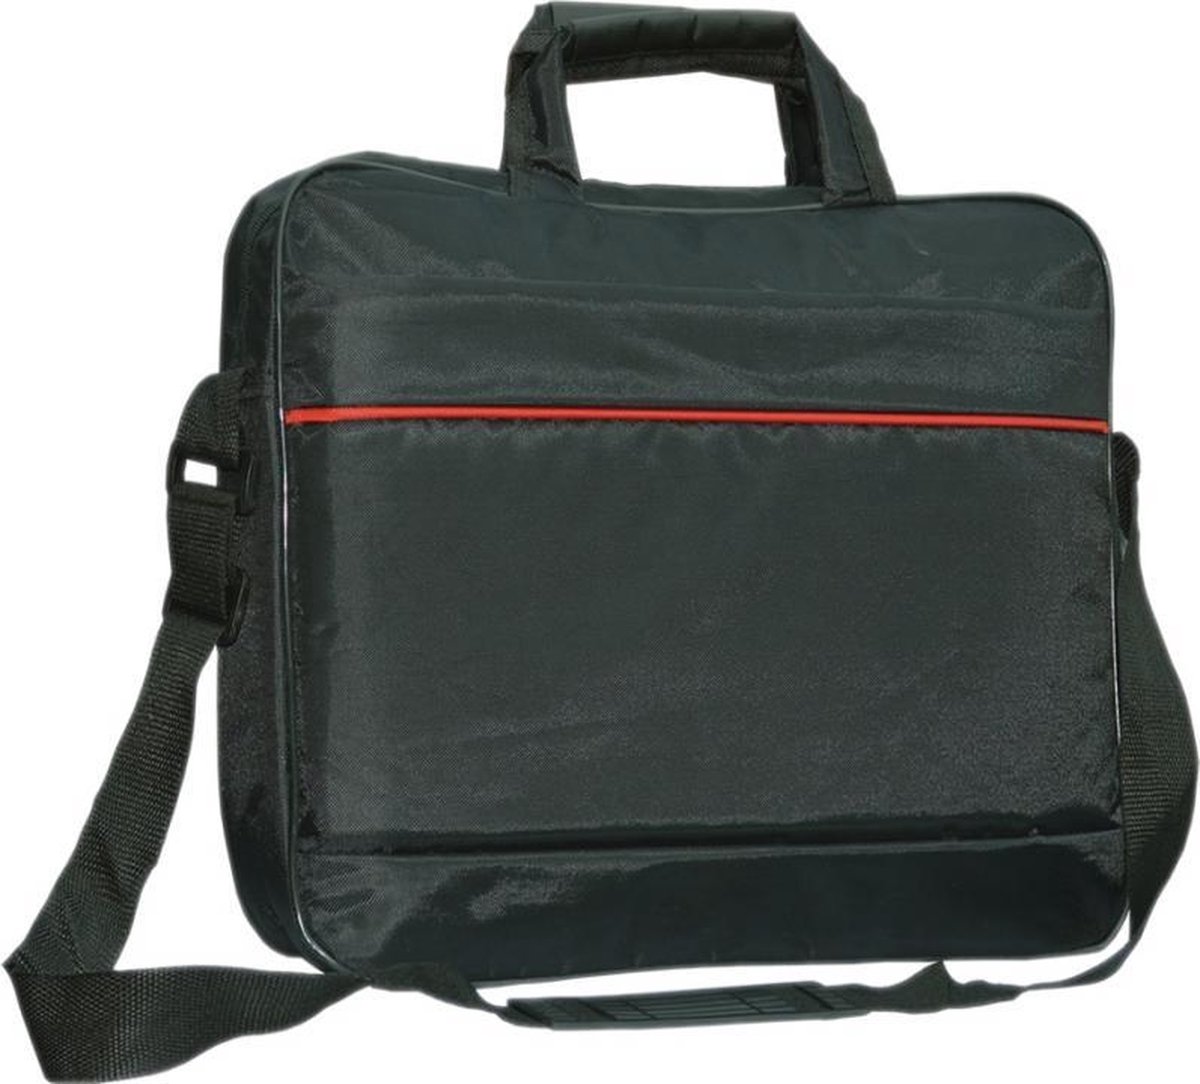 Asus S301la C1140h laptoptas messenger bag / schoudertas / tas , zwart , merk i12Cover